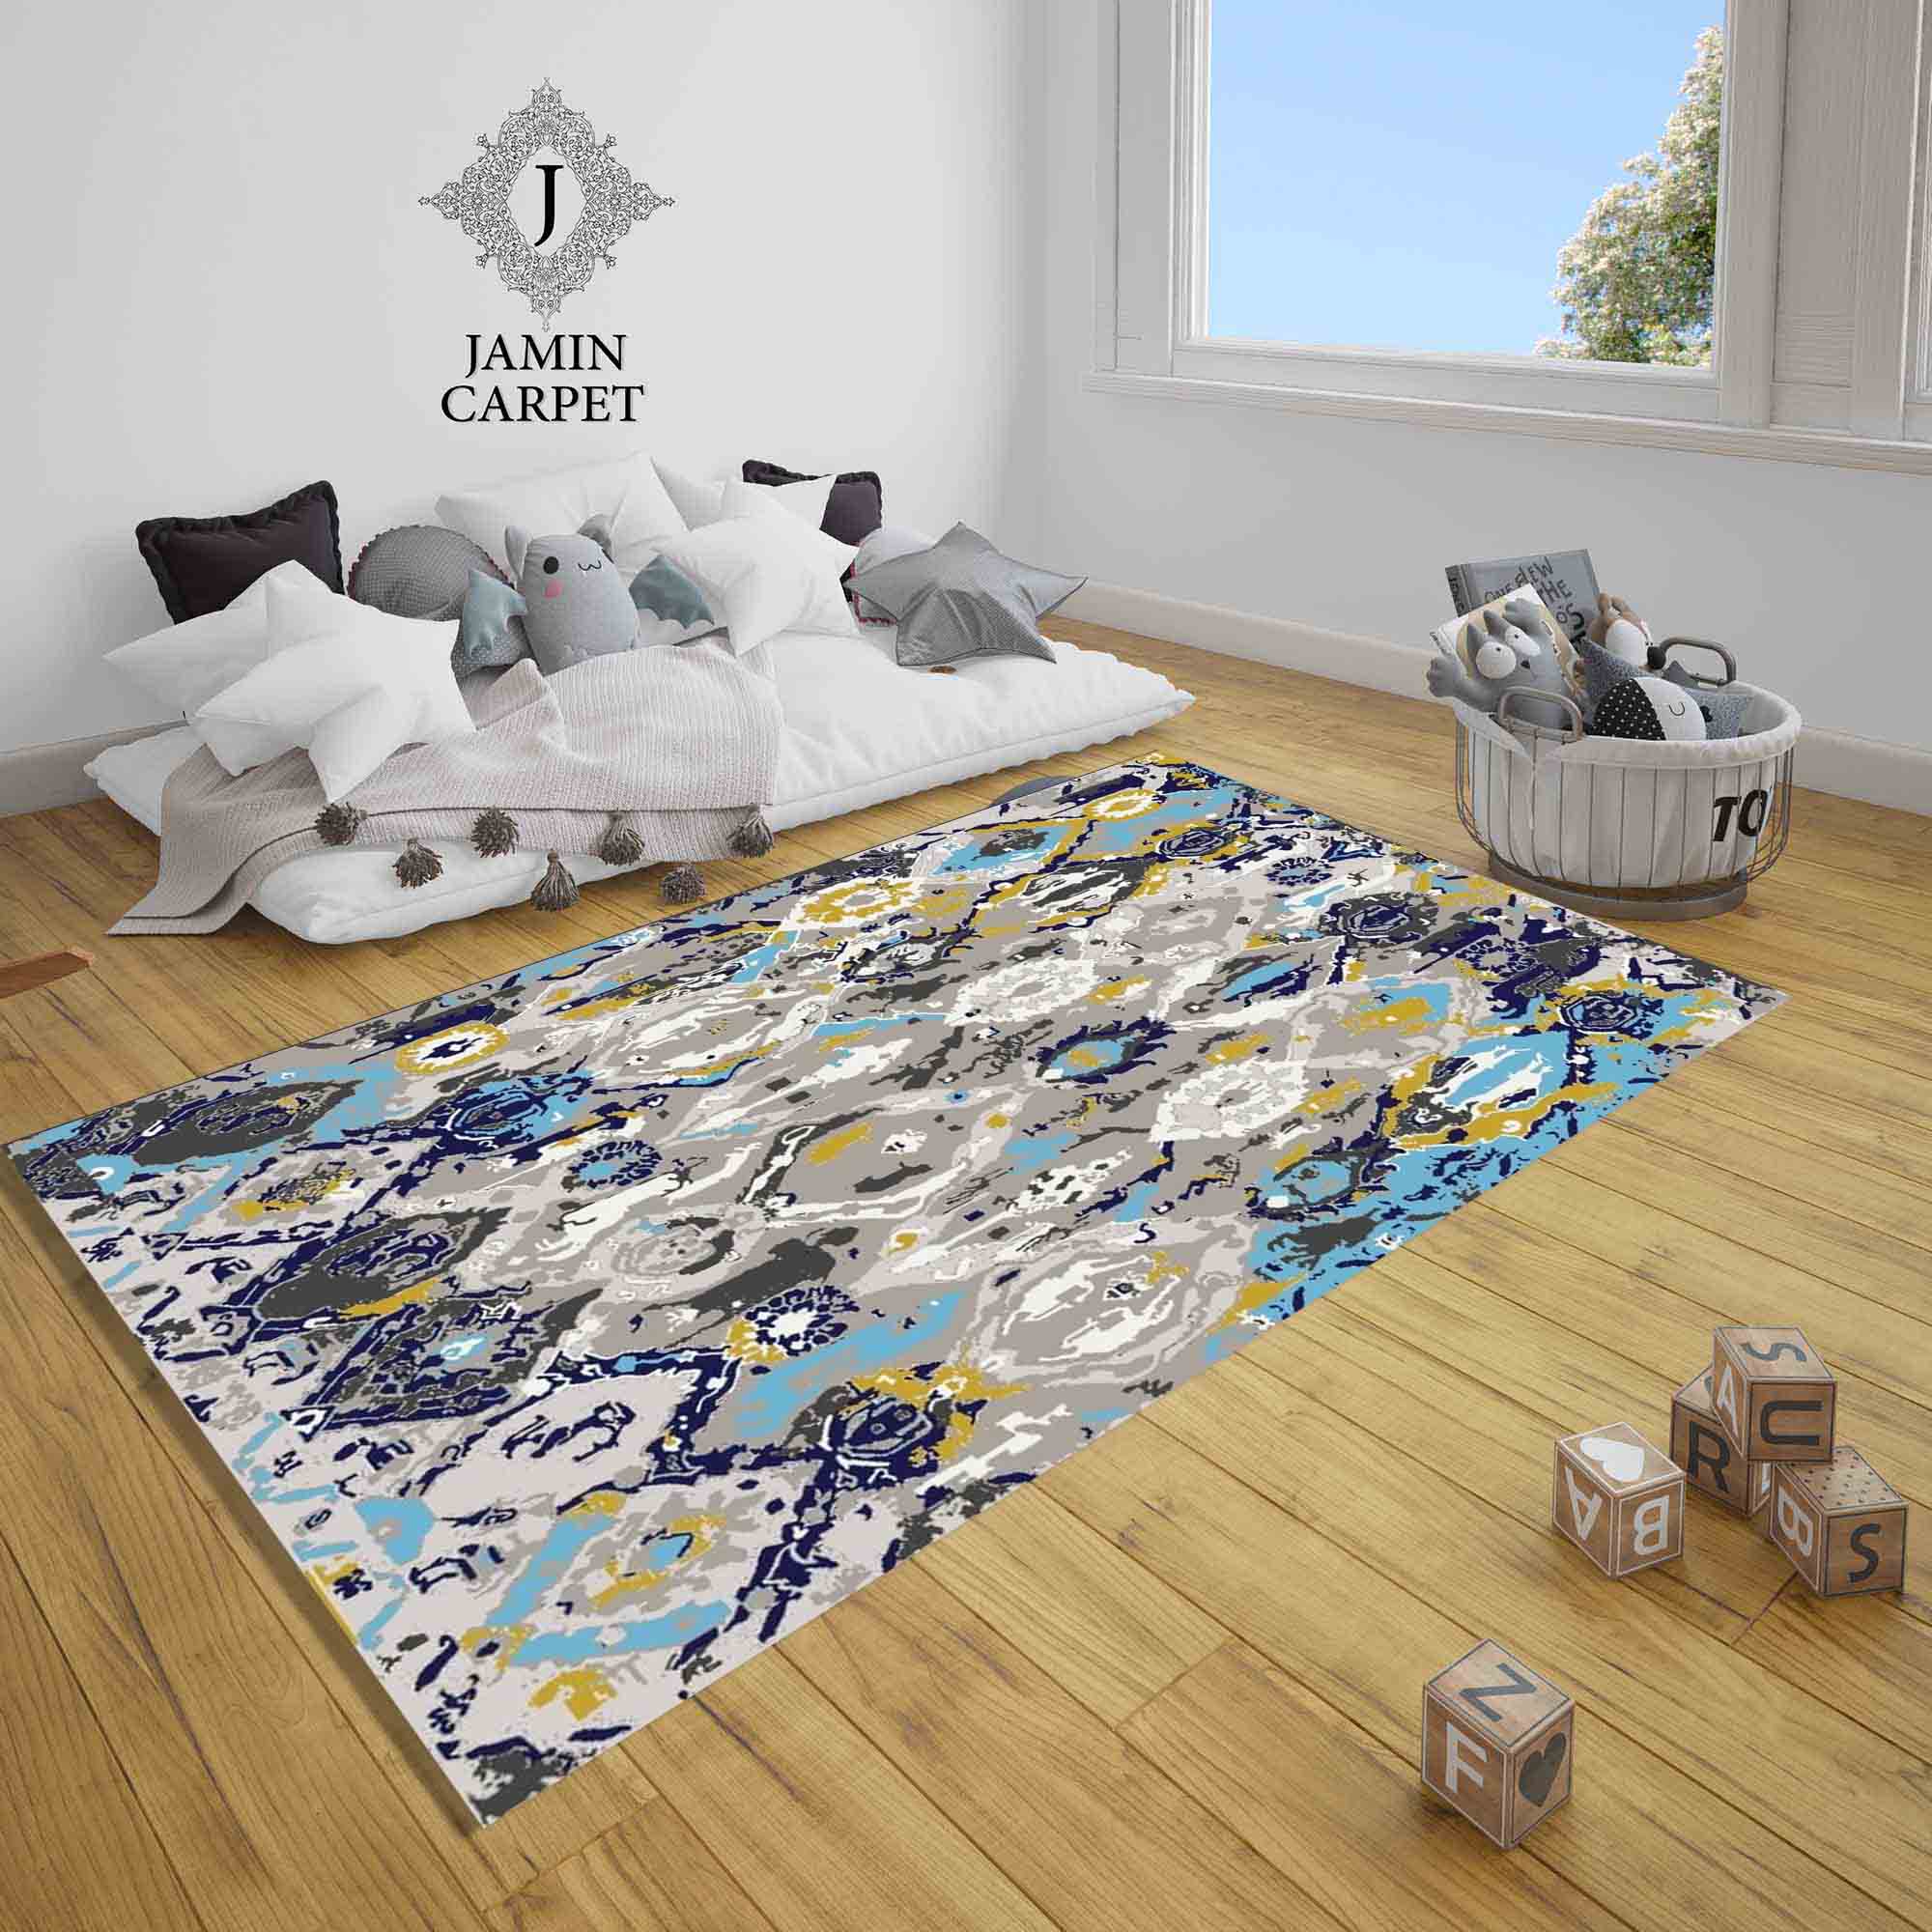 Fantasy carpet, code 247, comb 400, density 1800, all acrylic